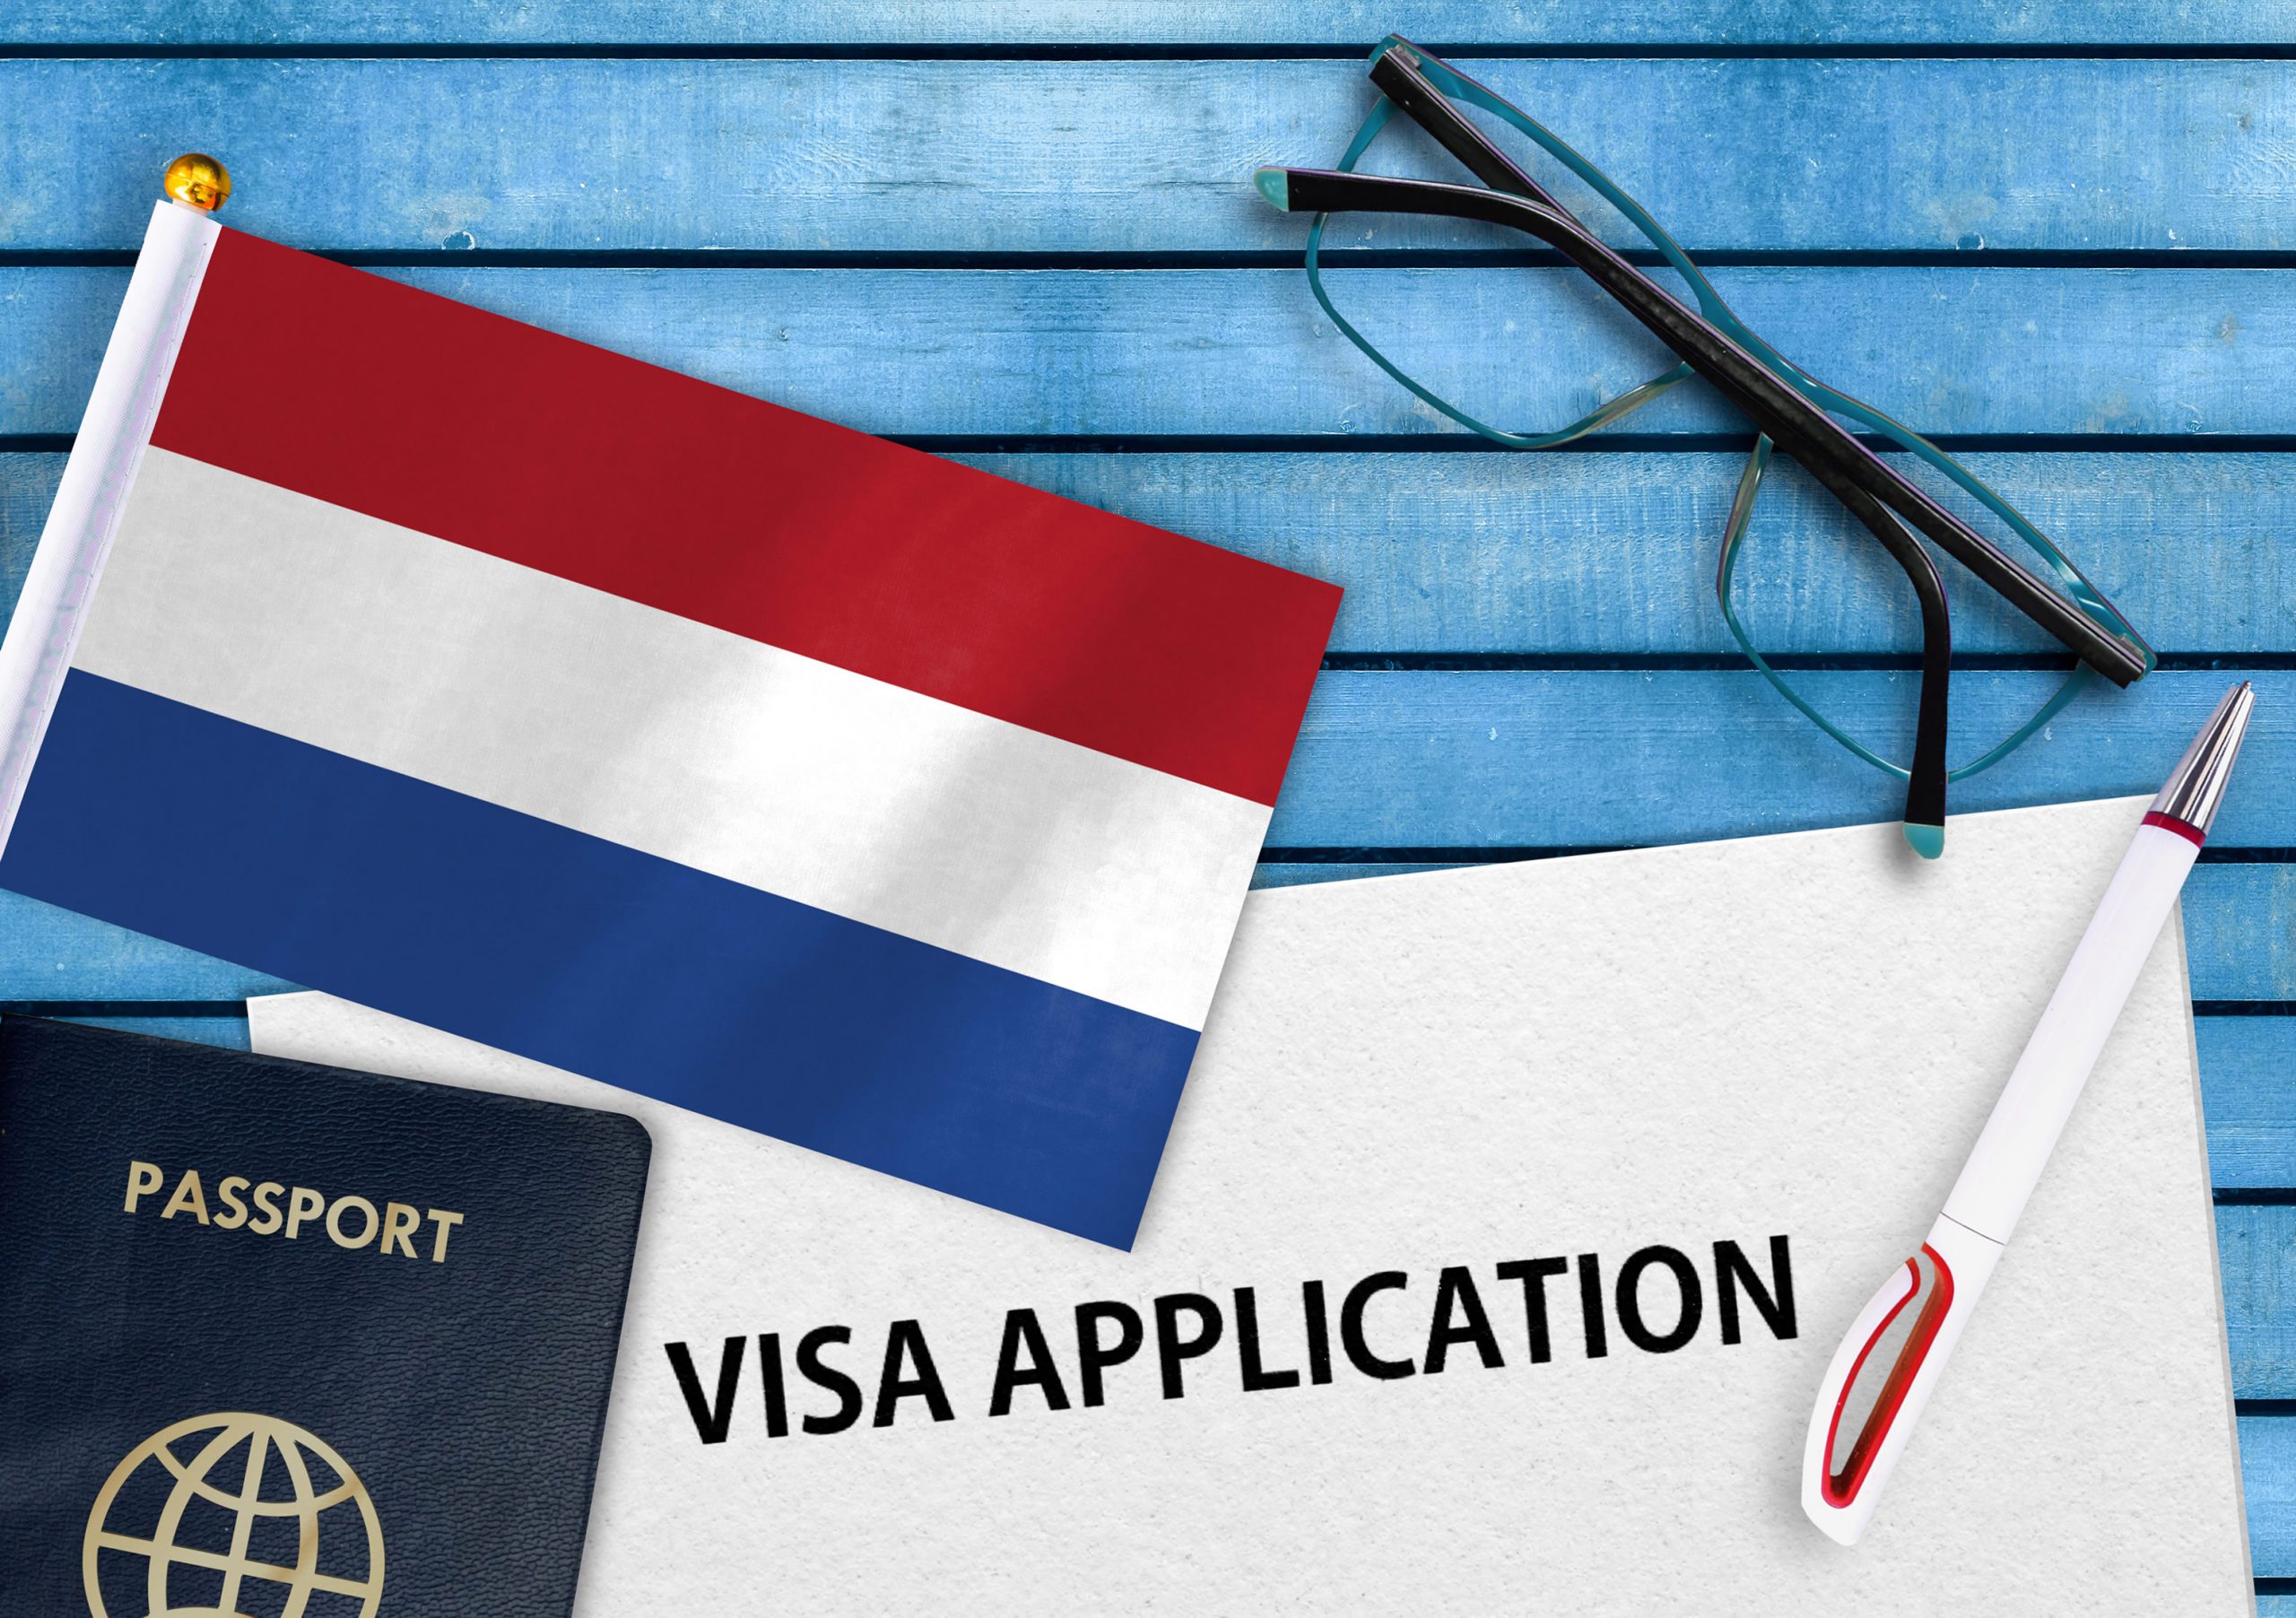 holland travel visa